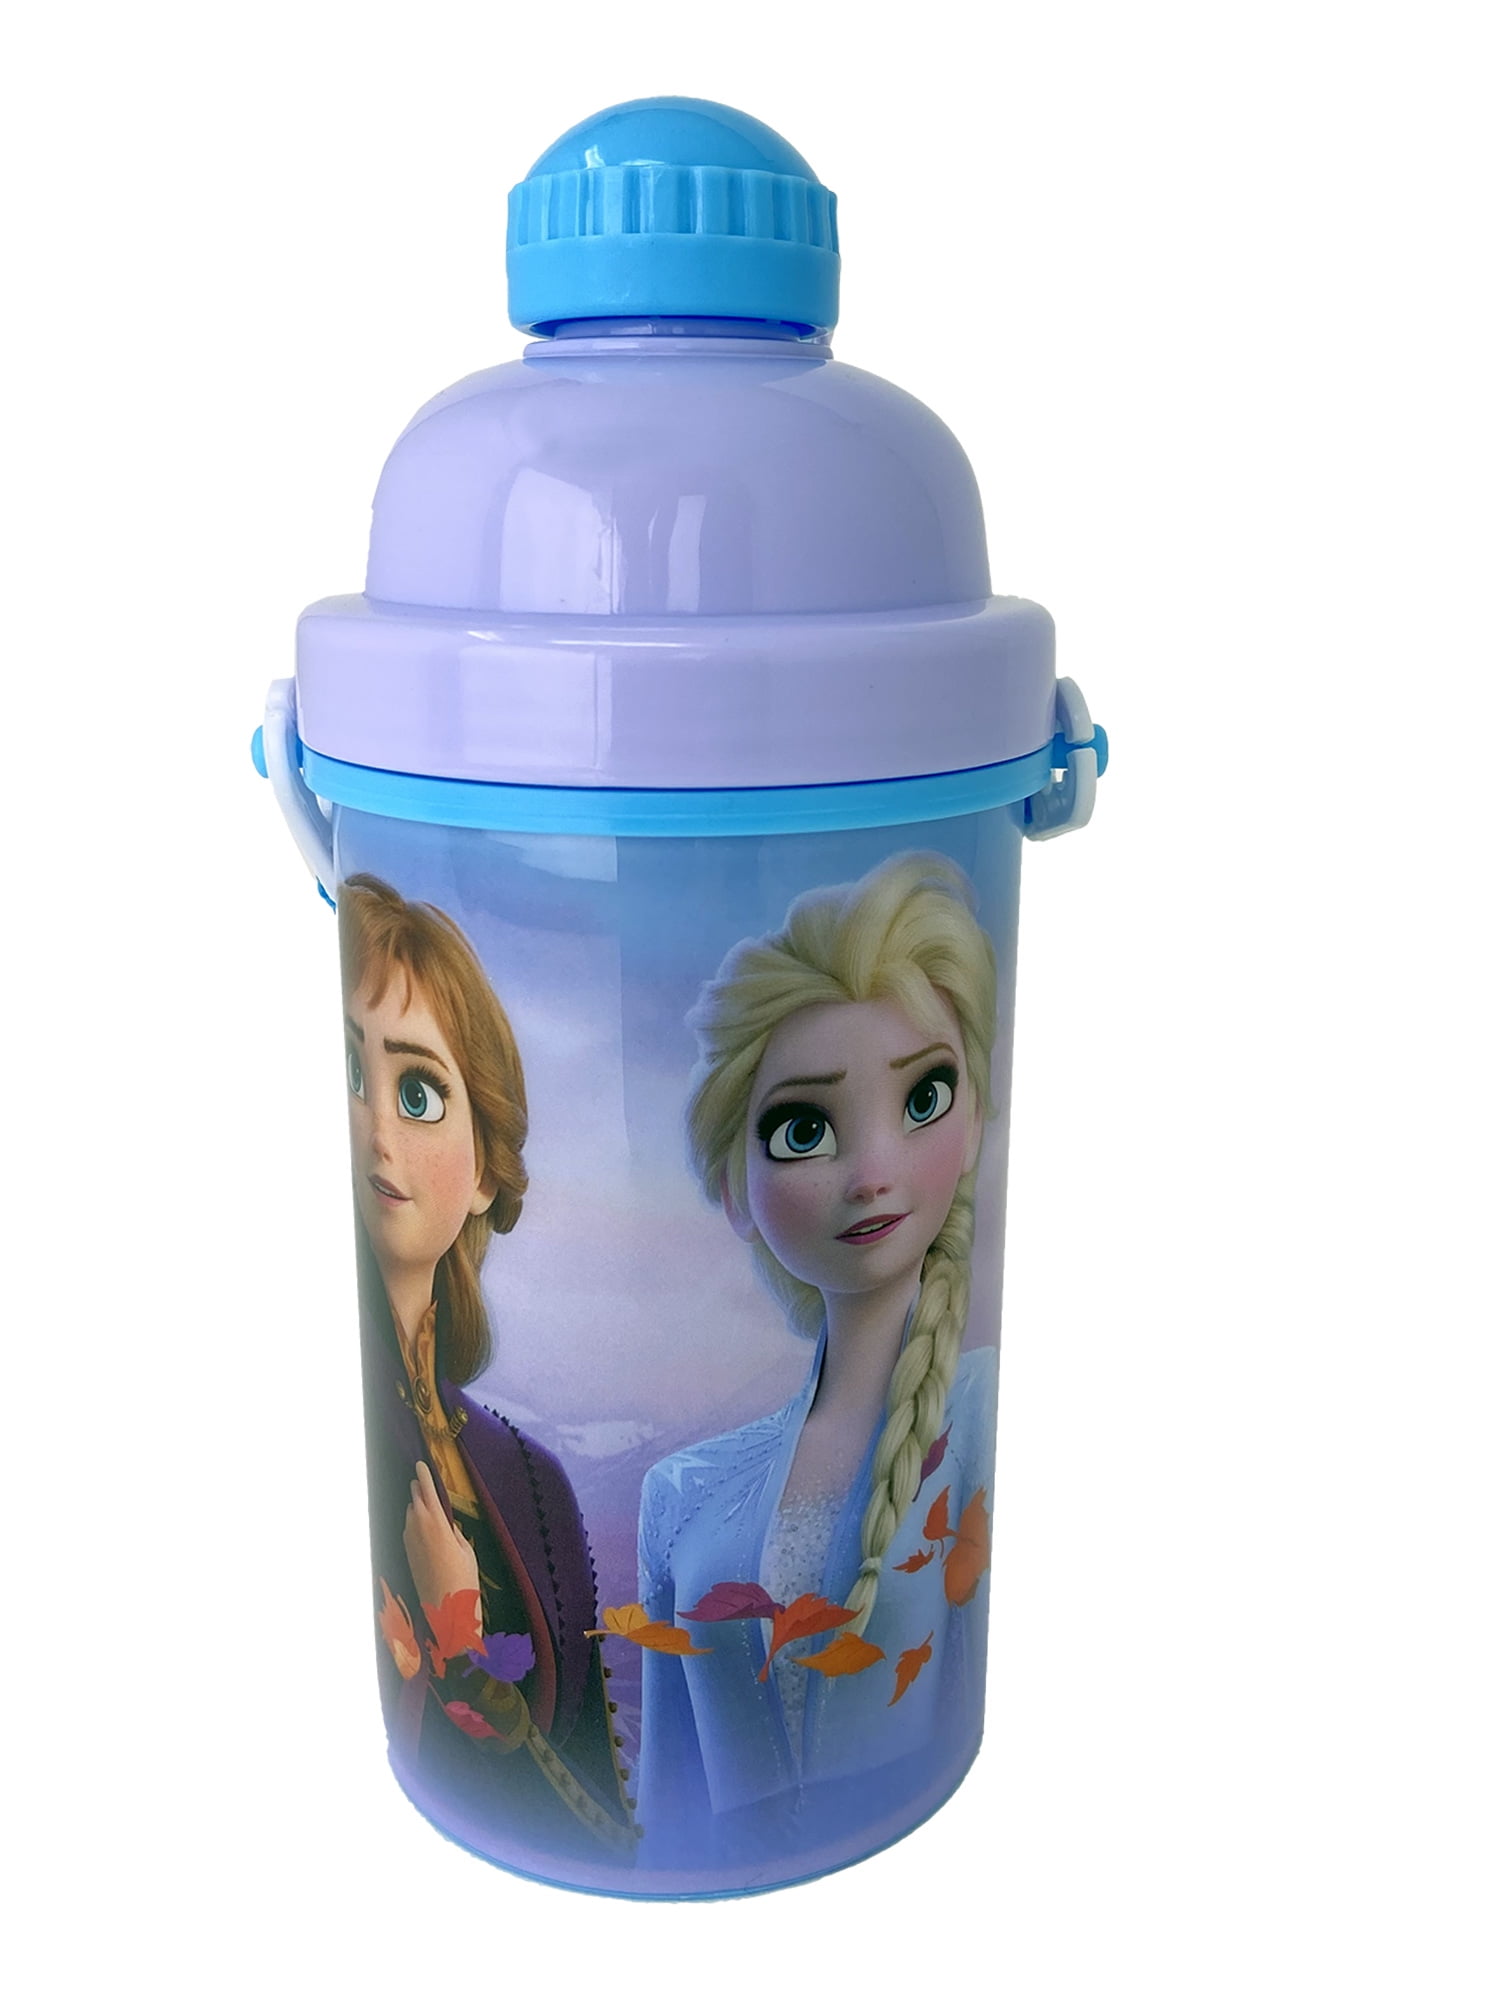 Upd Frozen II 30 oz Sullivan Bottle